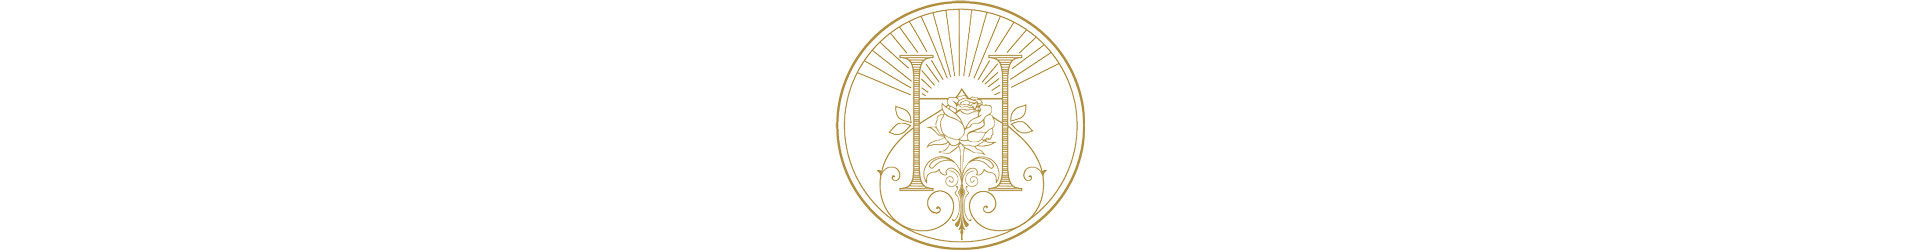 Highness Emblem